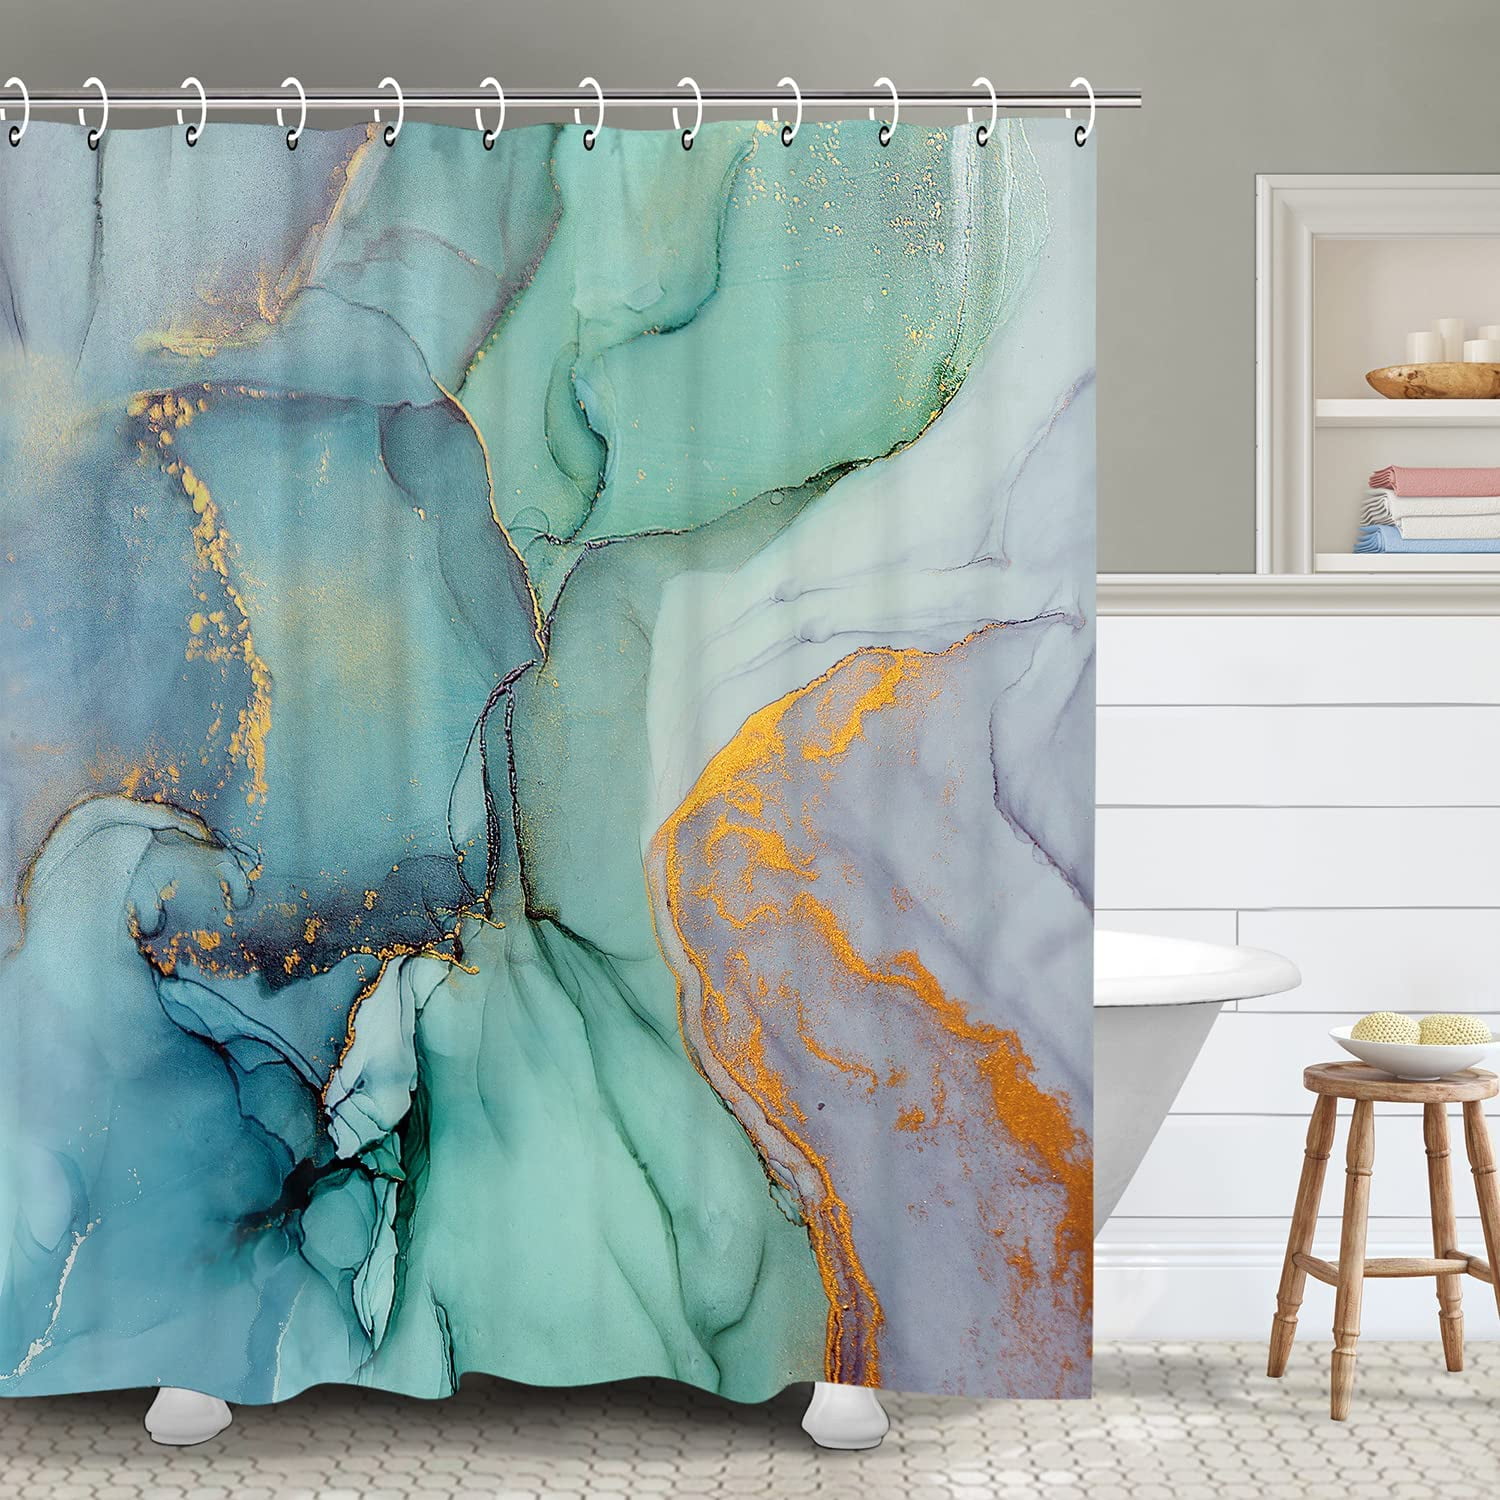 Details about   Blue White Shower Curtain Nautical Ocean Fish Print for Bathroom 